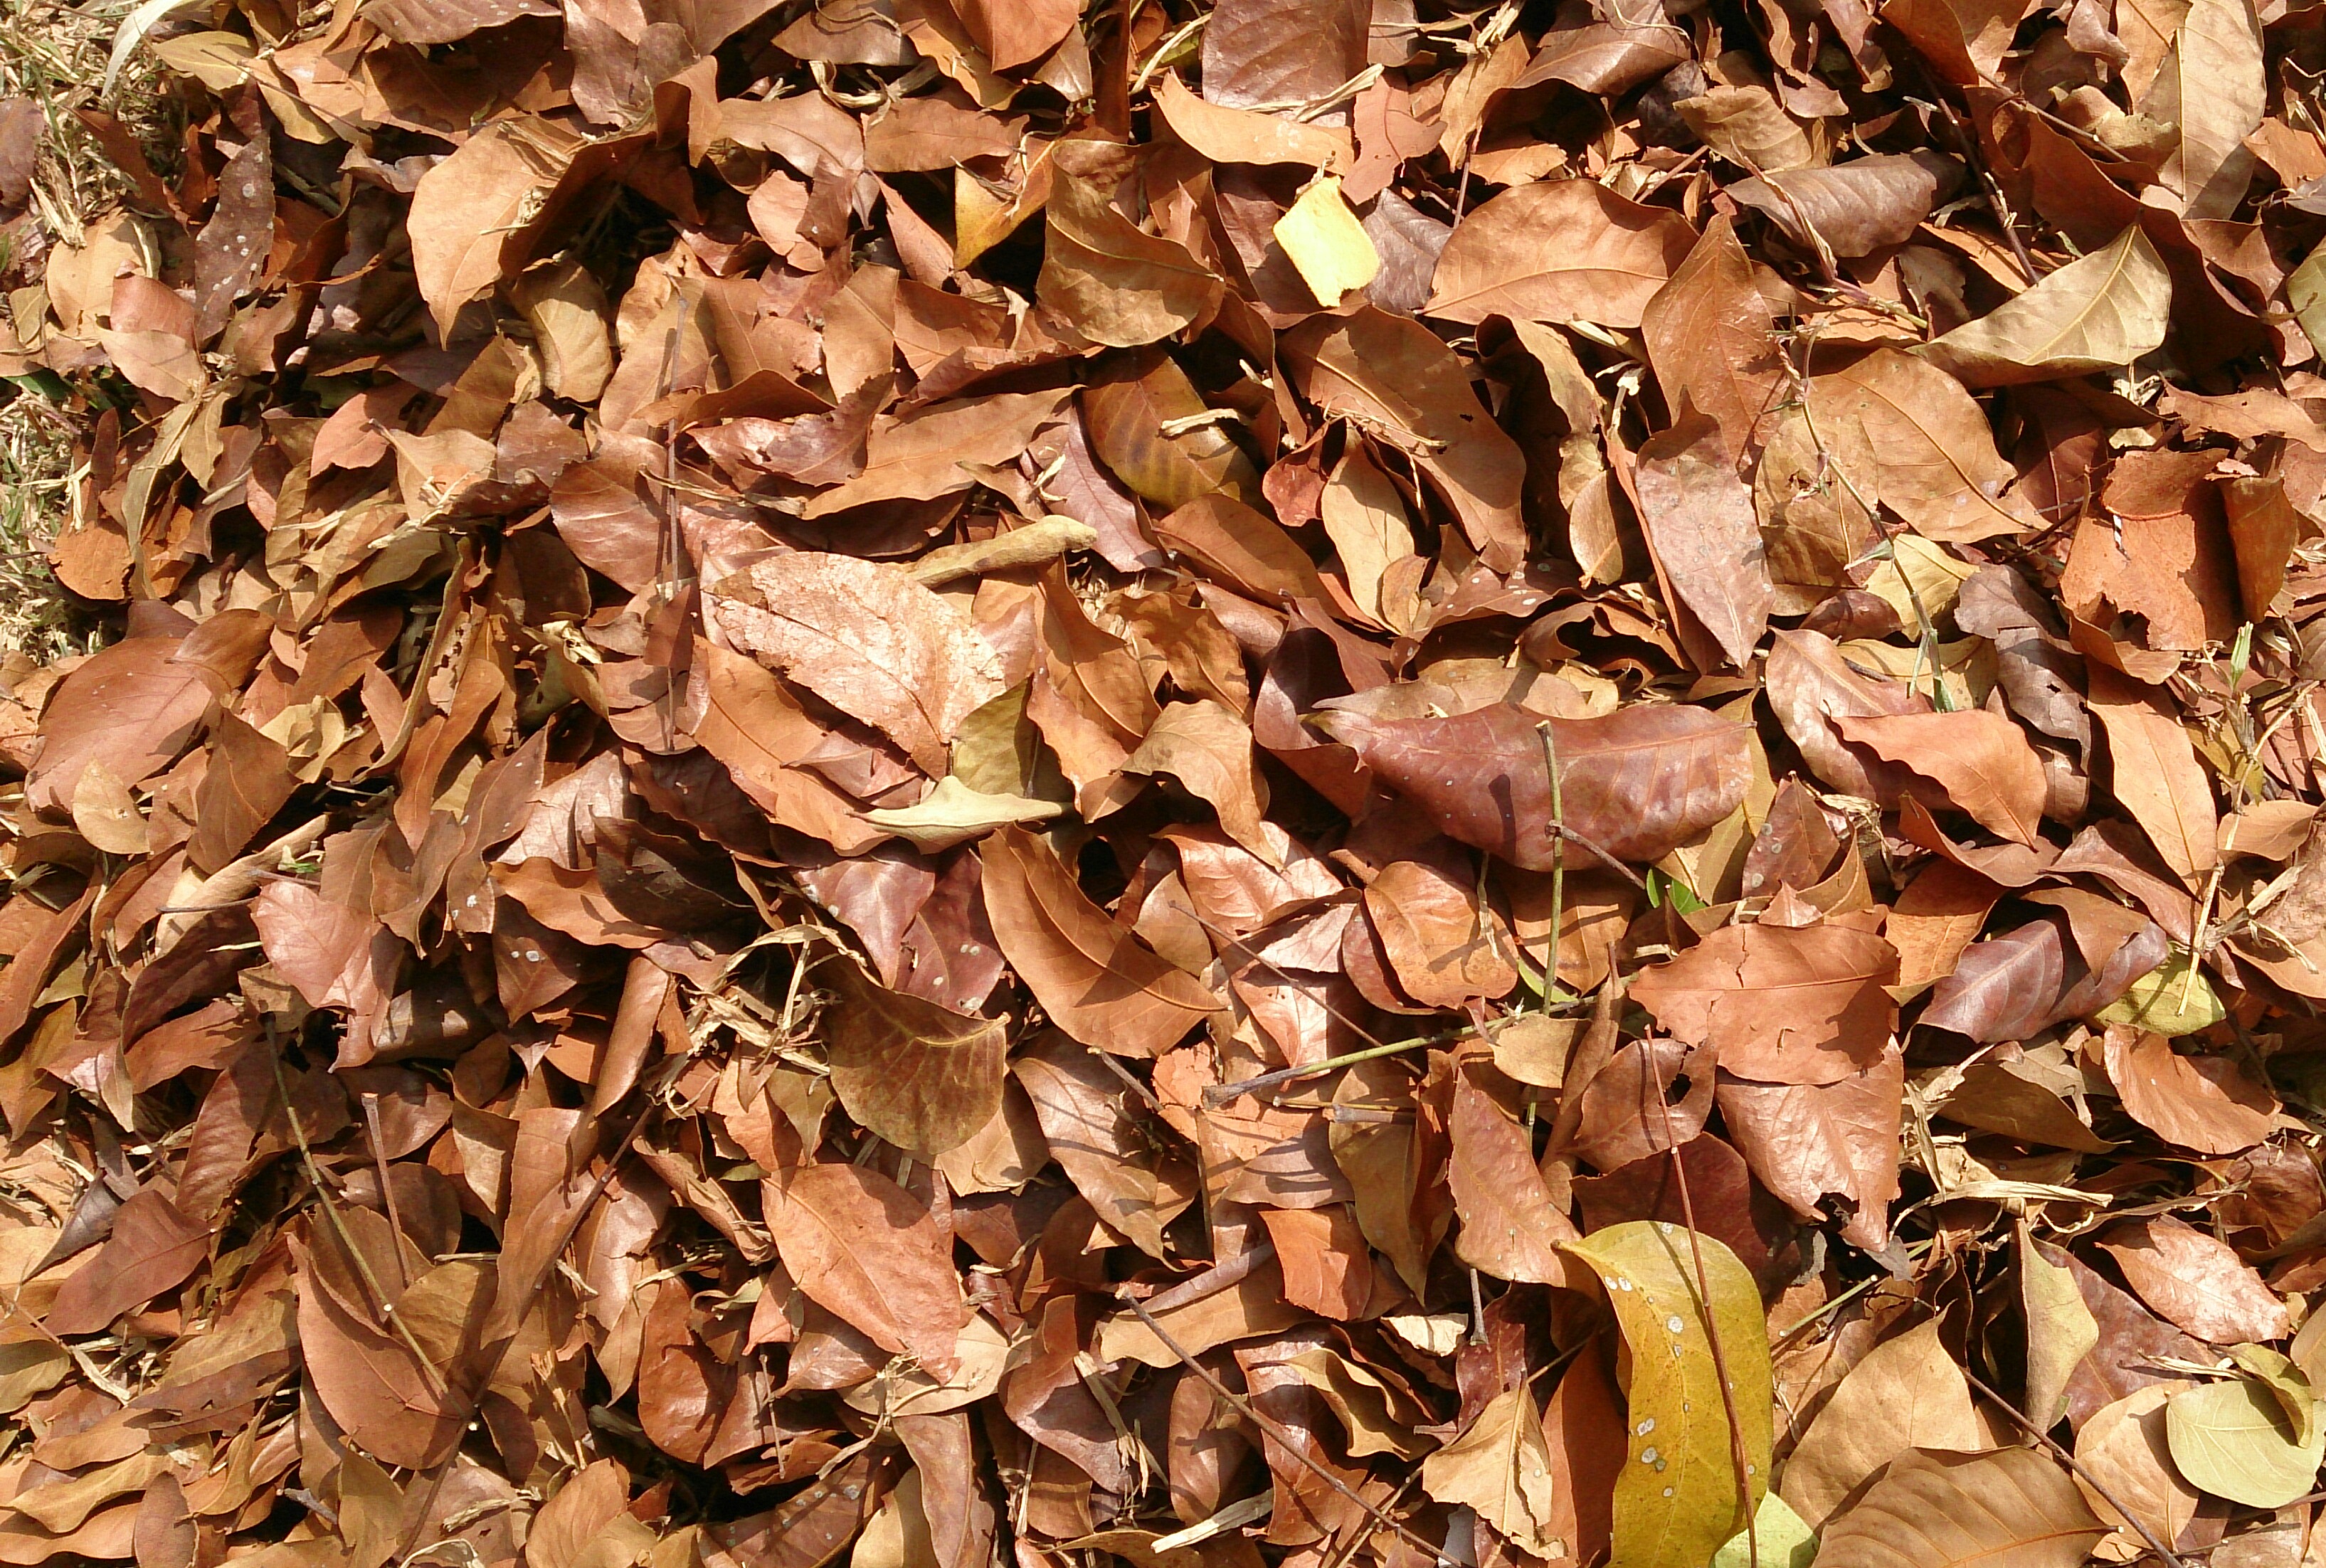 File:Leaf litter.jpg - Wikimedia Commons